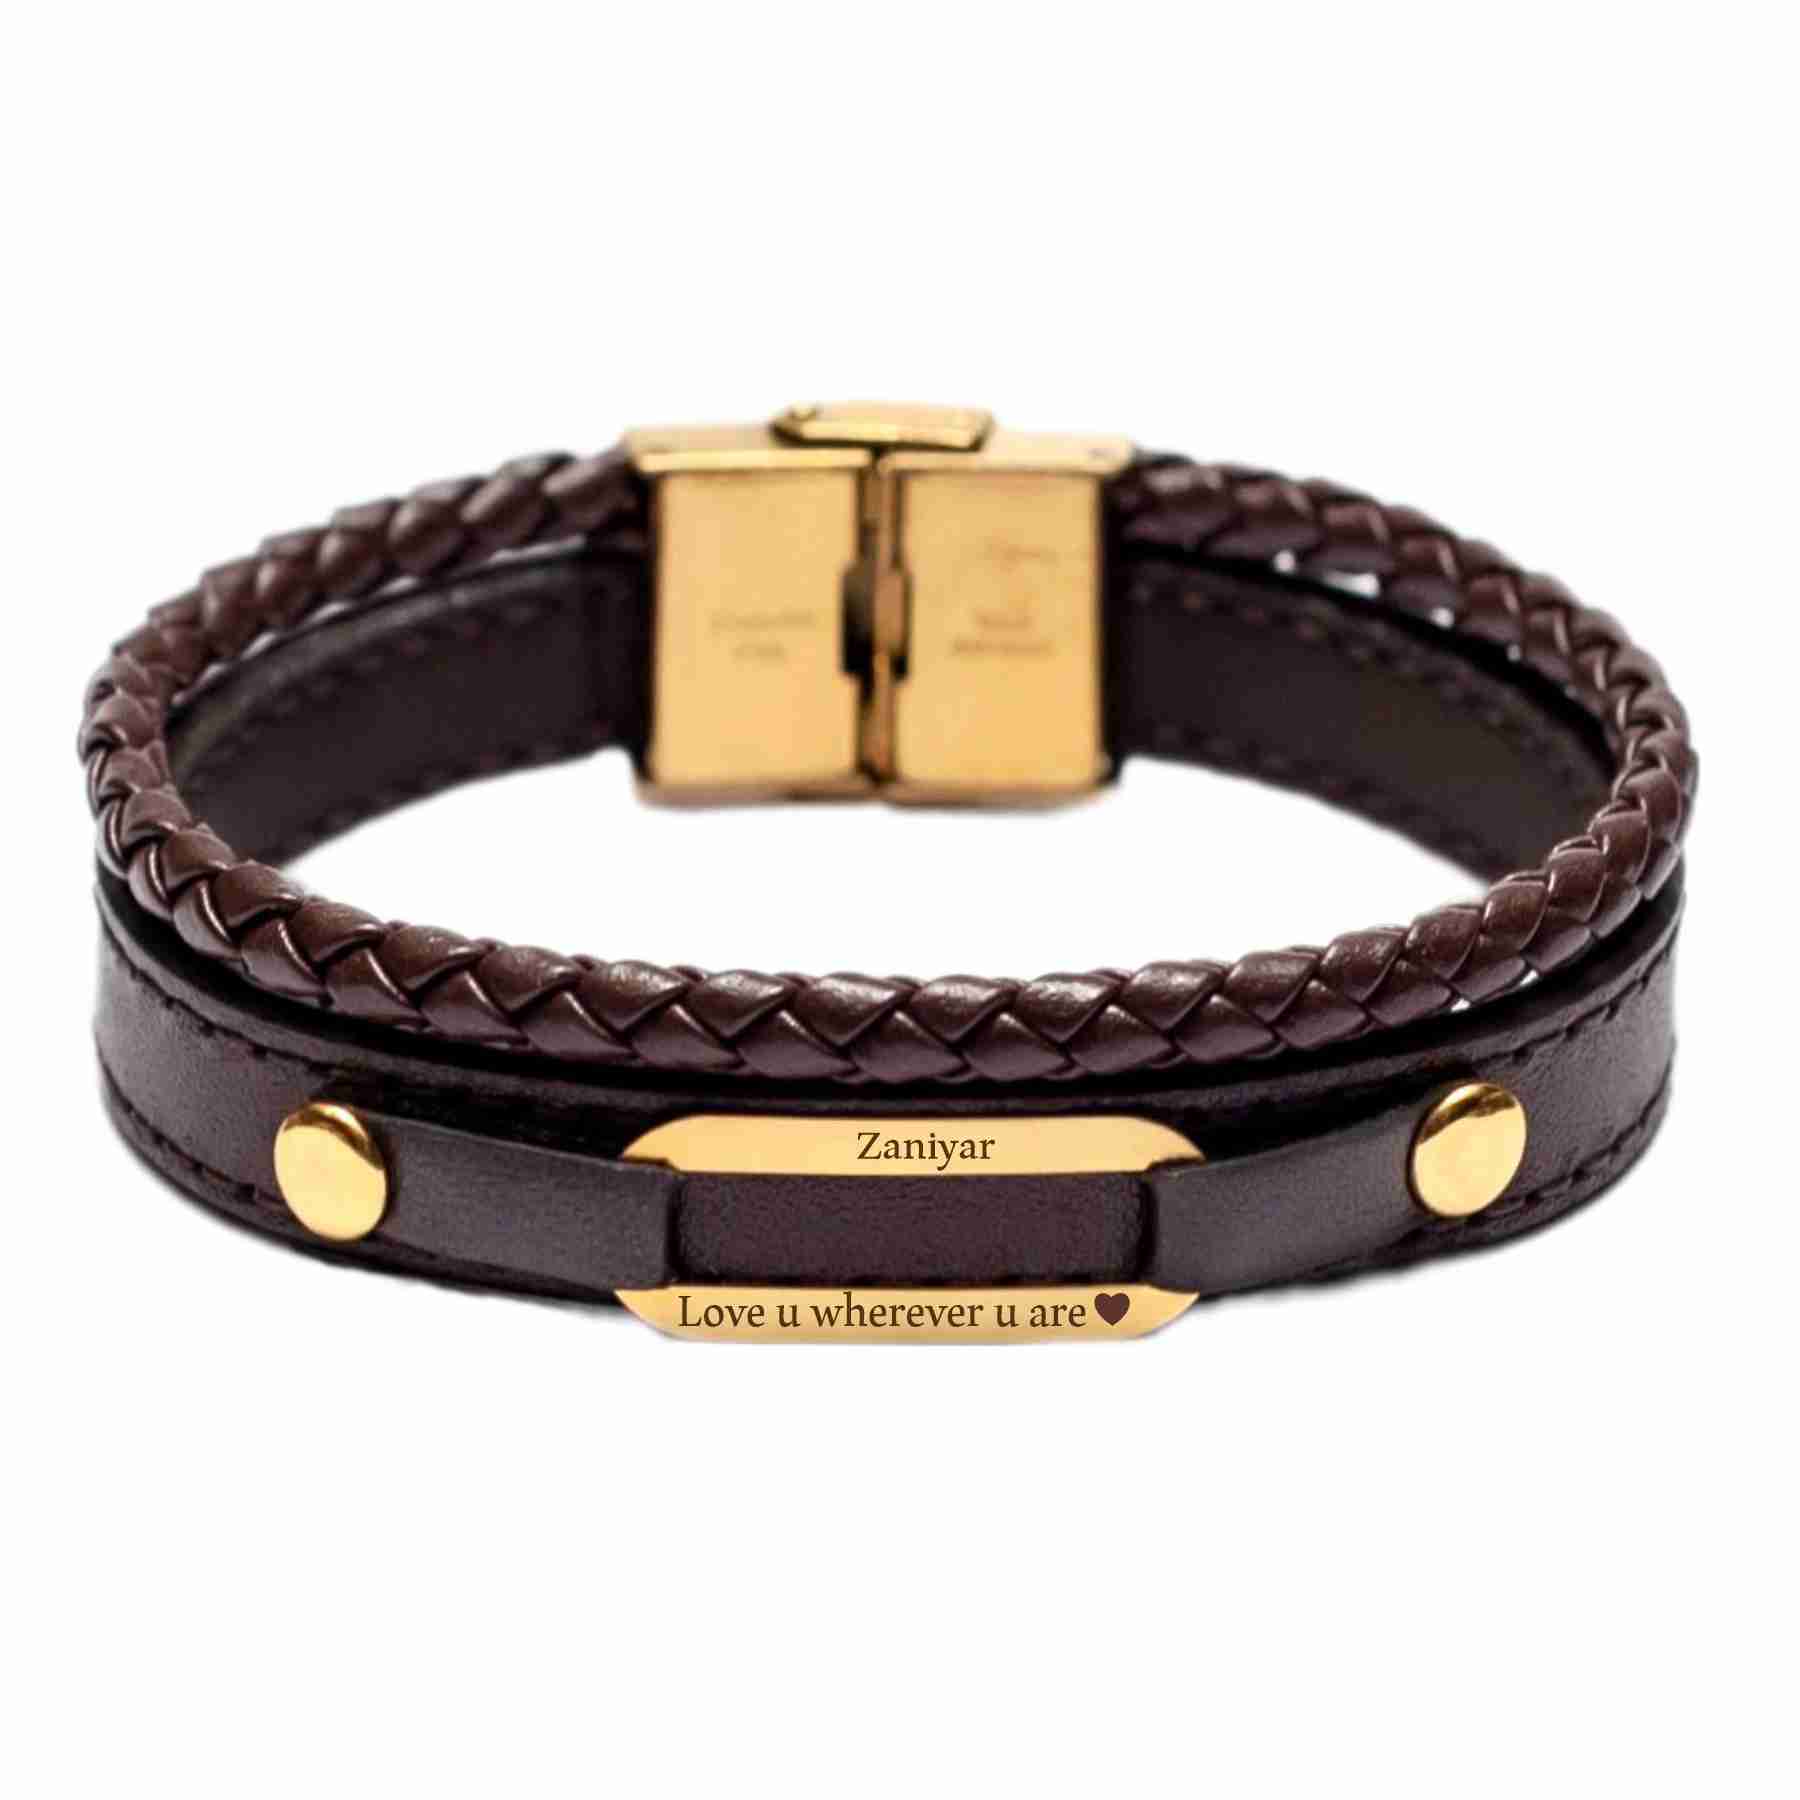 دستبند طلا 18 عیار مردانه لیردا مدل اسم زانیار 6400